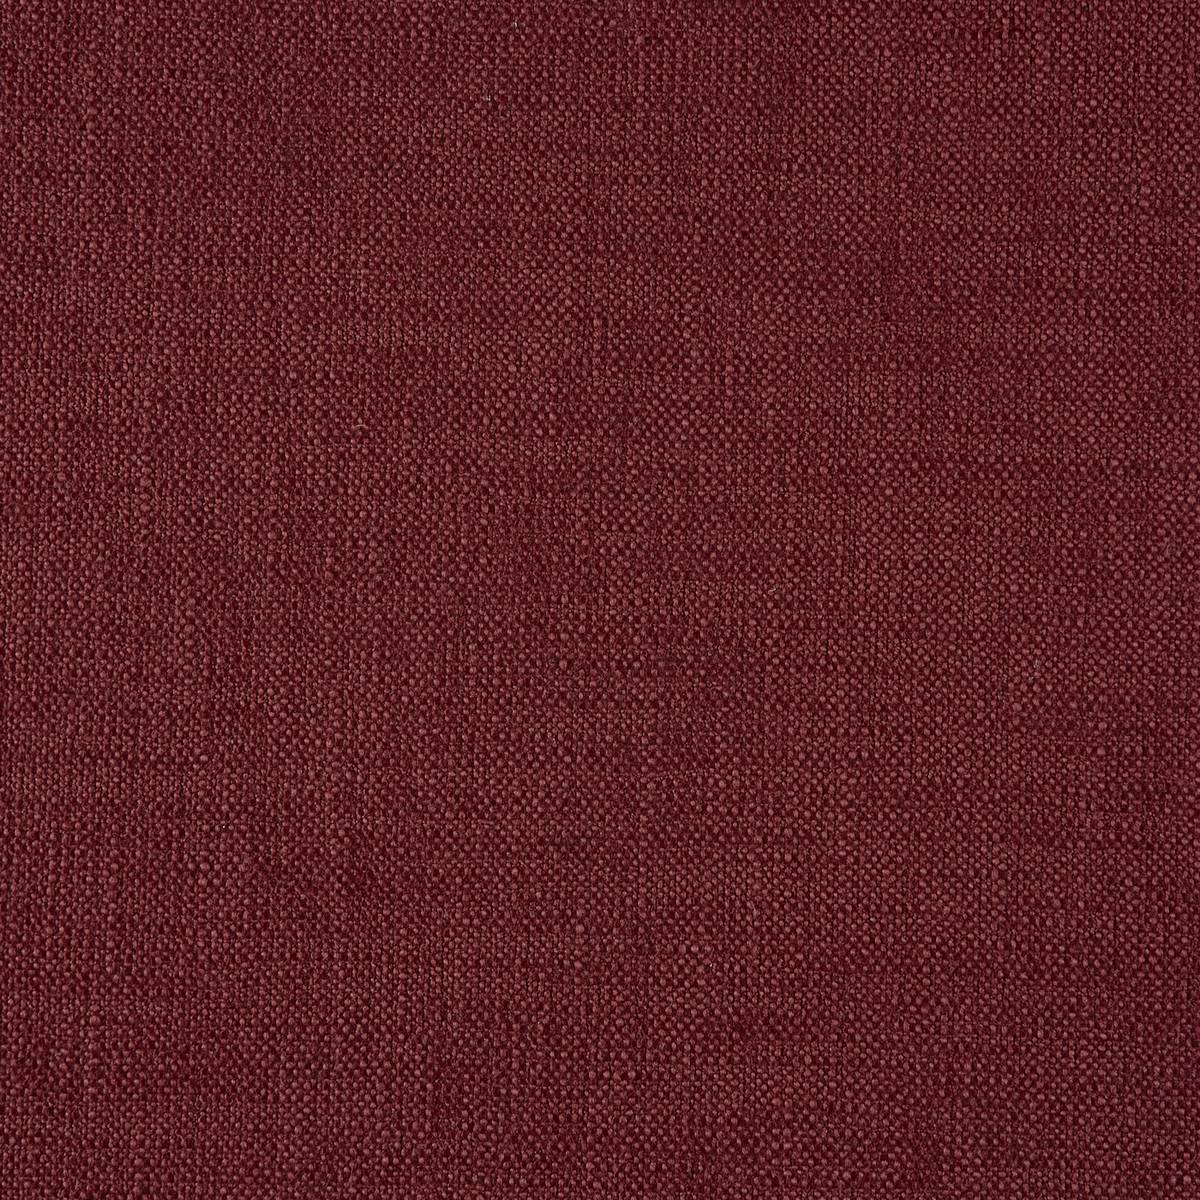 Rustic Bordeaux Fabric by Prestigious Textiles